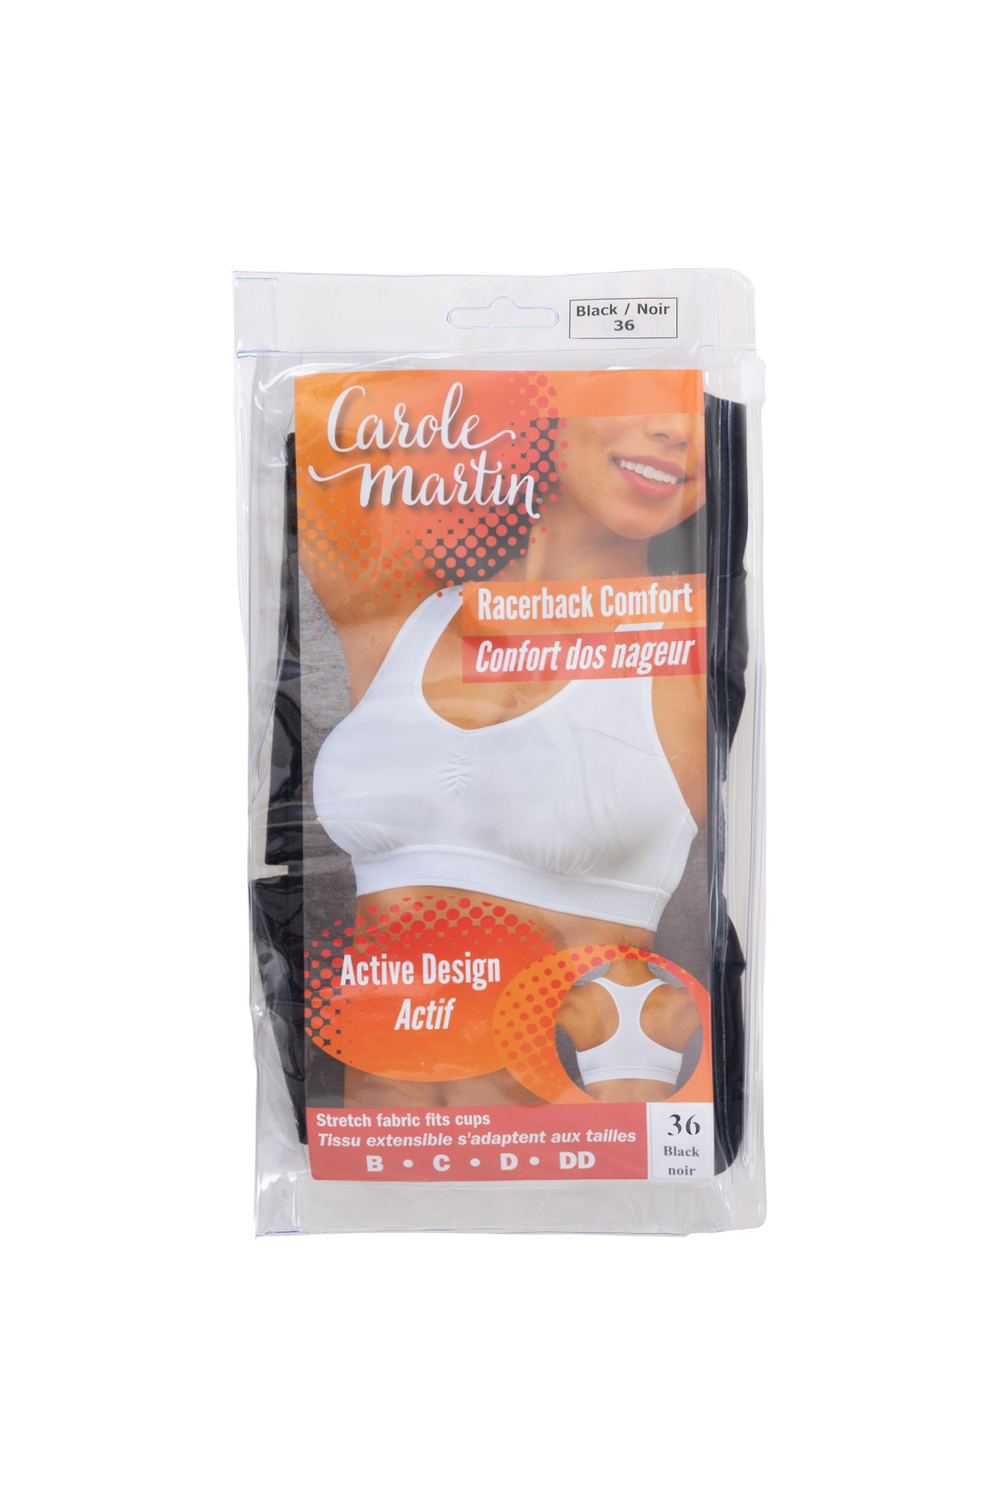 Carole Martin - Cotton Comfort bra, black, 36. Colour: black. Size: 36 b/c/d/dd